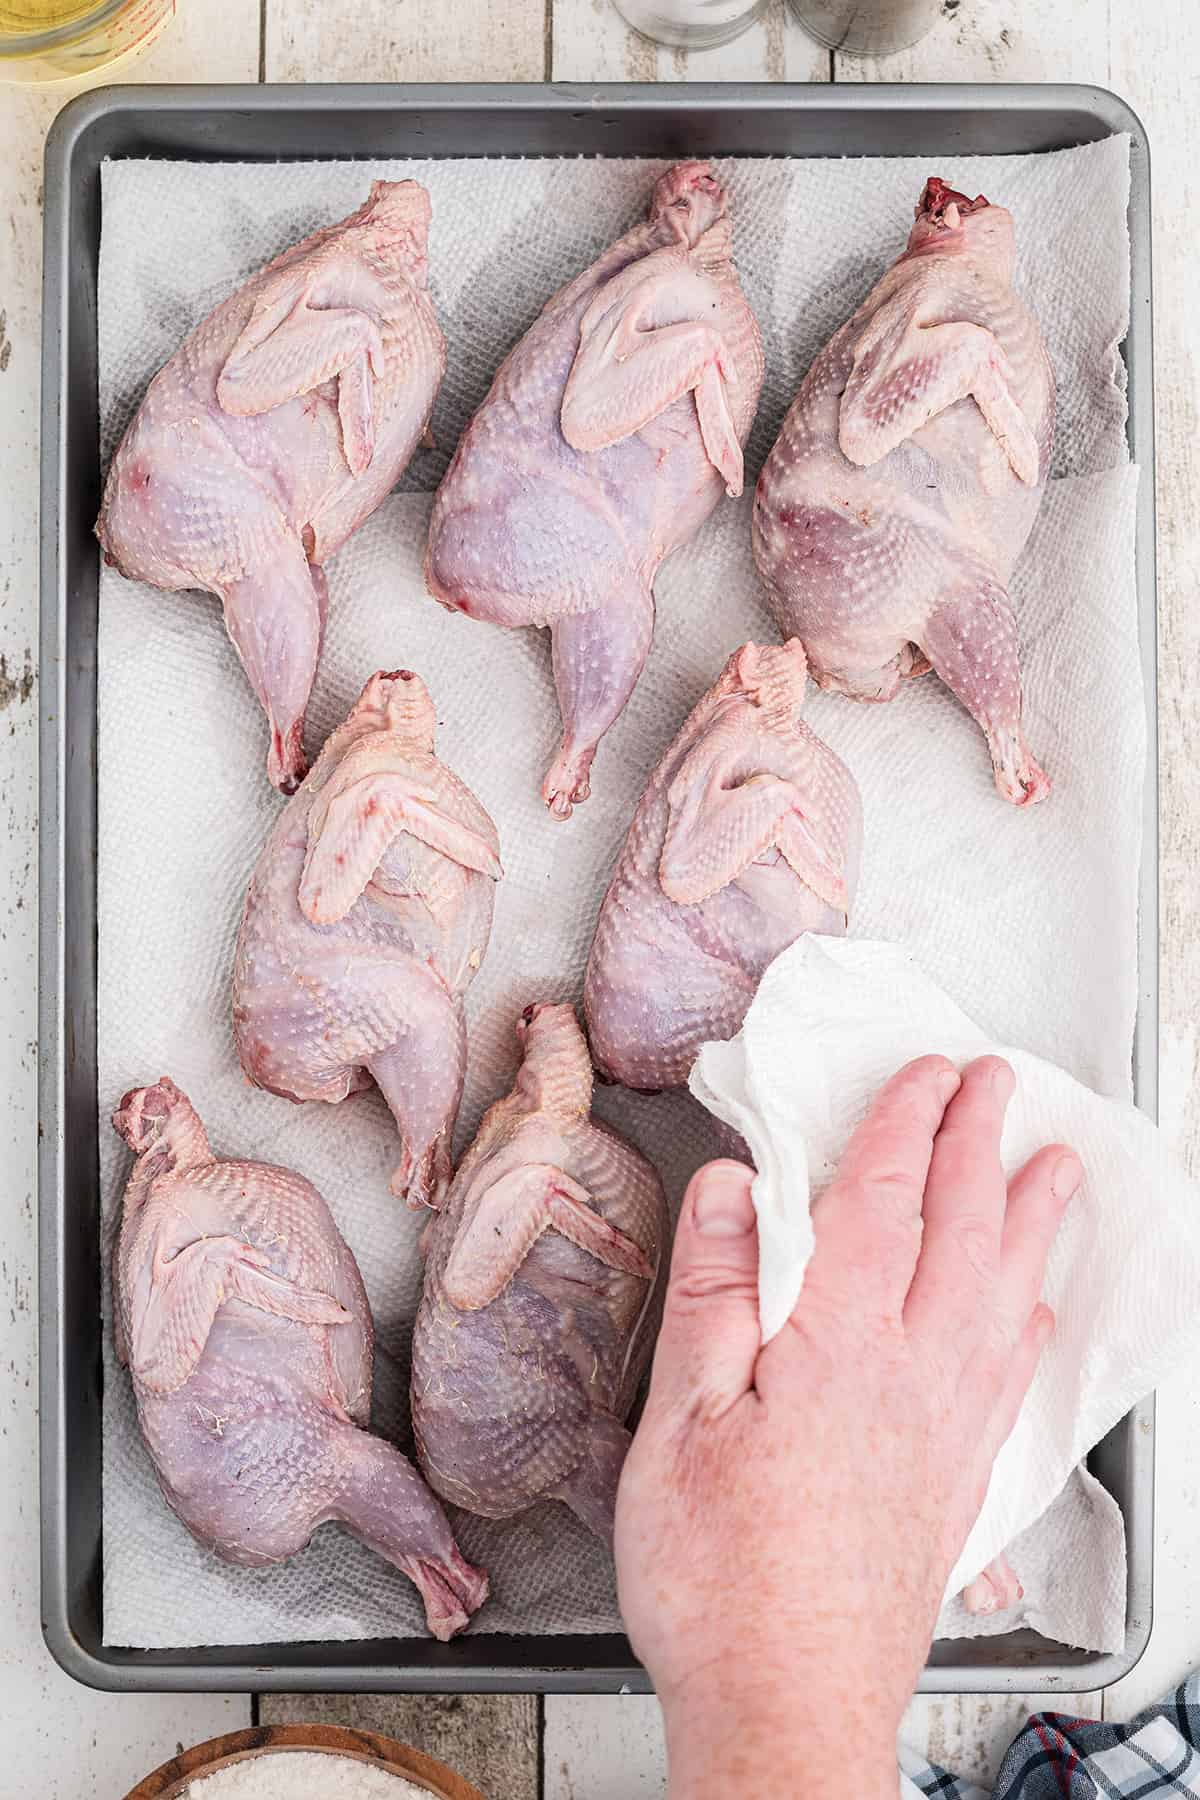 Drying whole prepared quail.